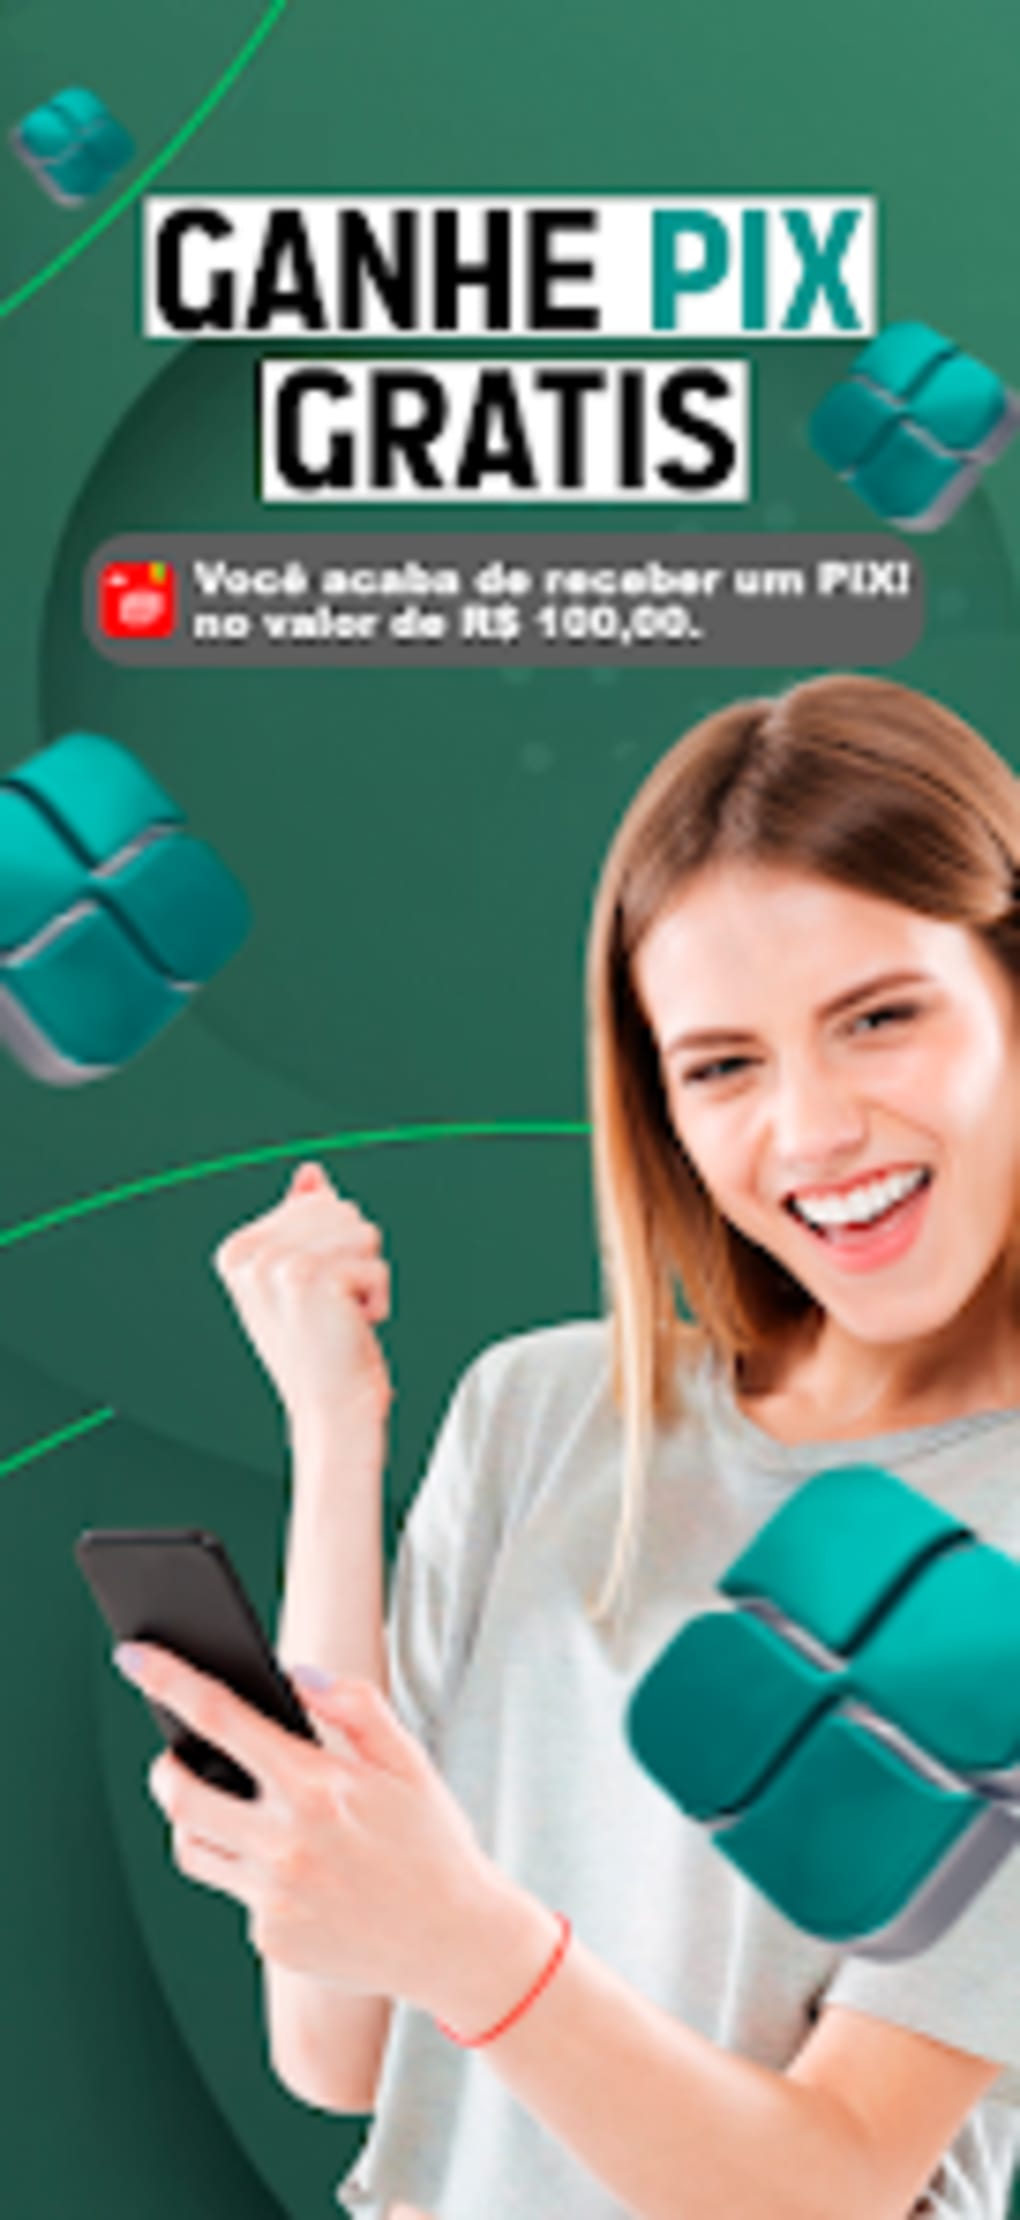 PIXFÁCIL - Ganhe pix fácil for Android - Free App Download